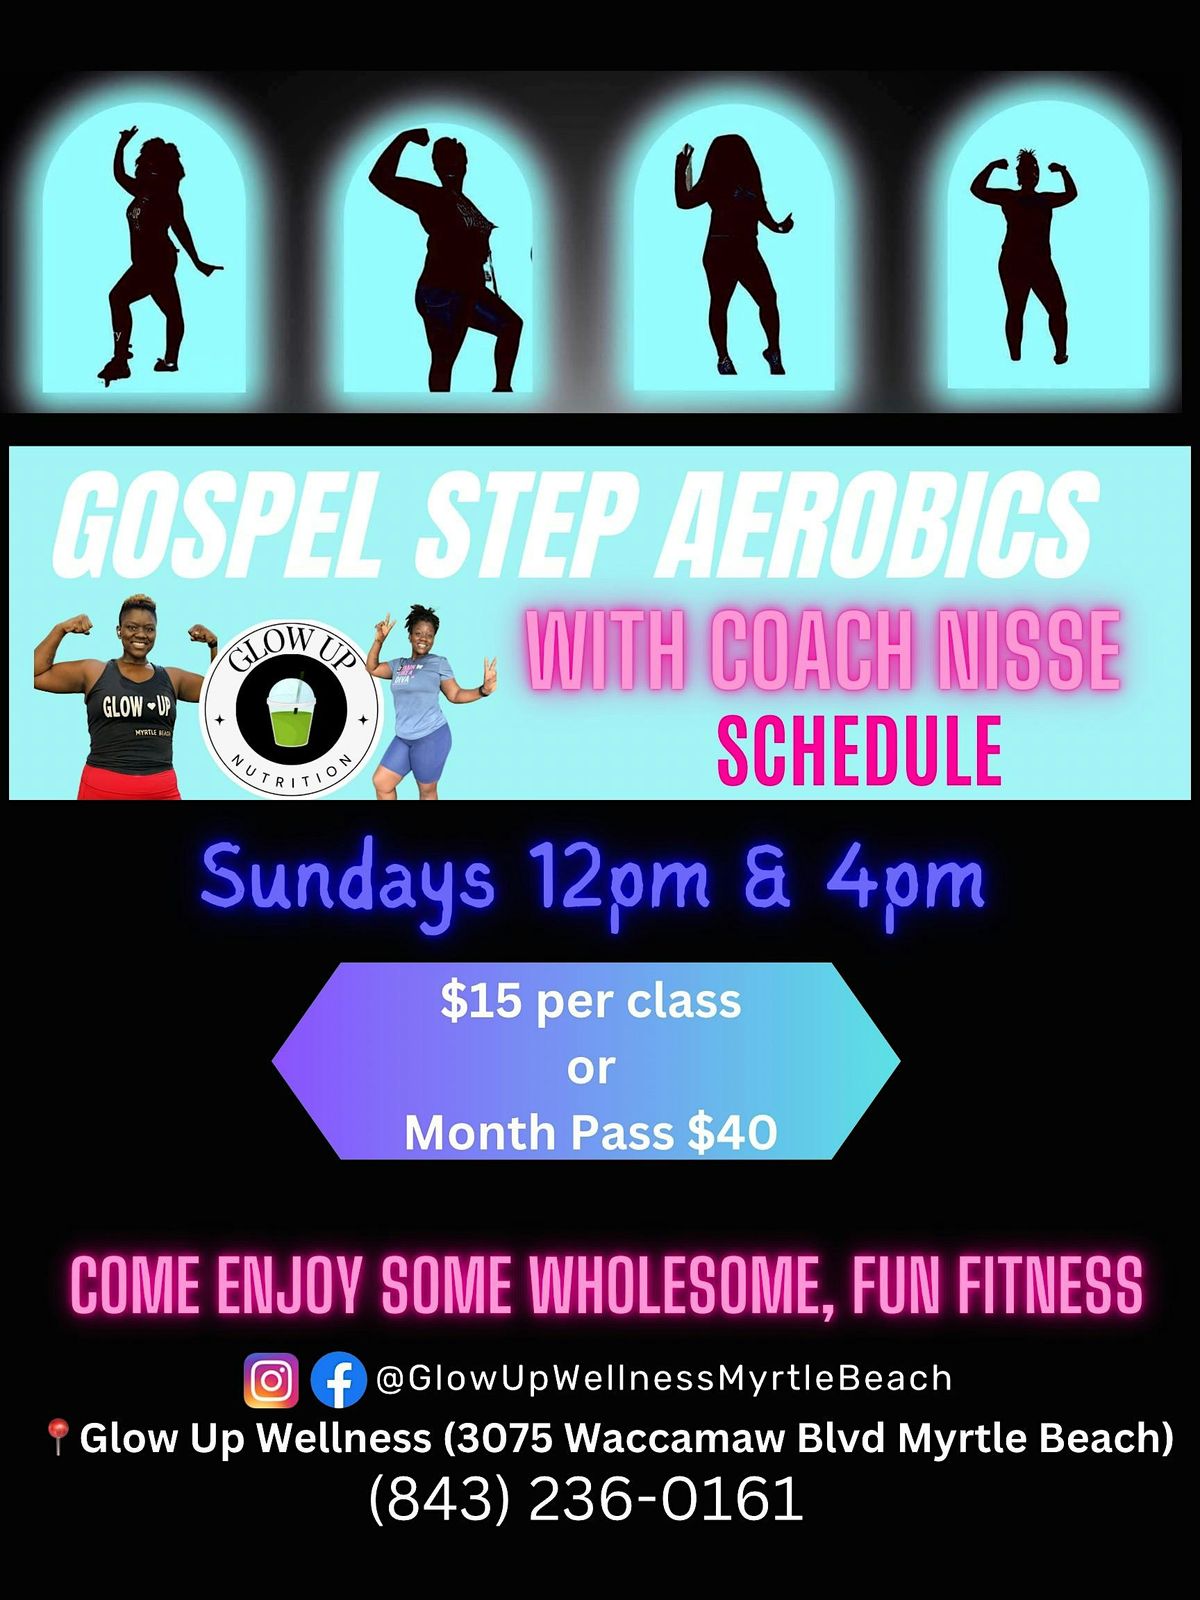 Sunday Gospel Step Aerobics